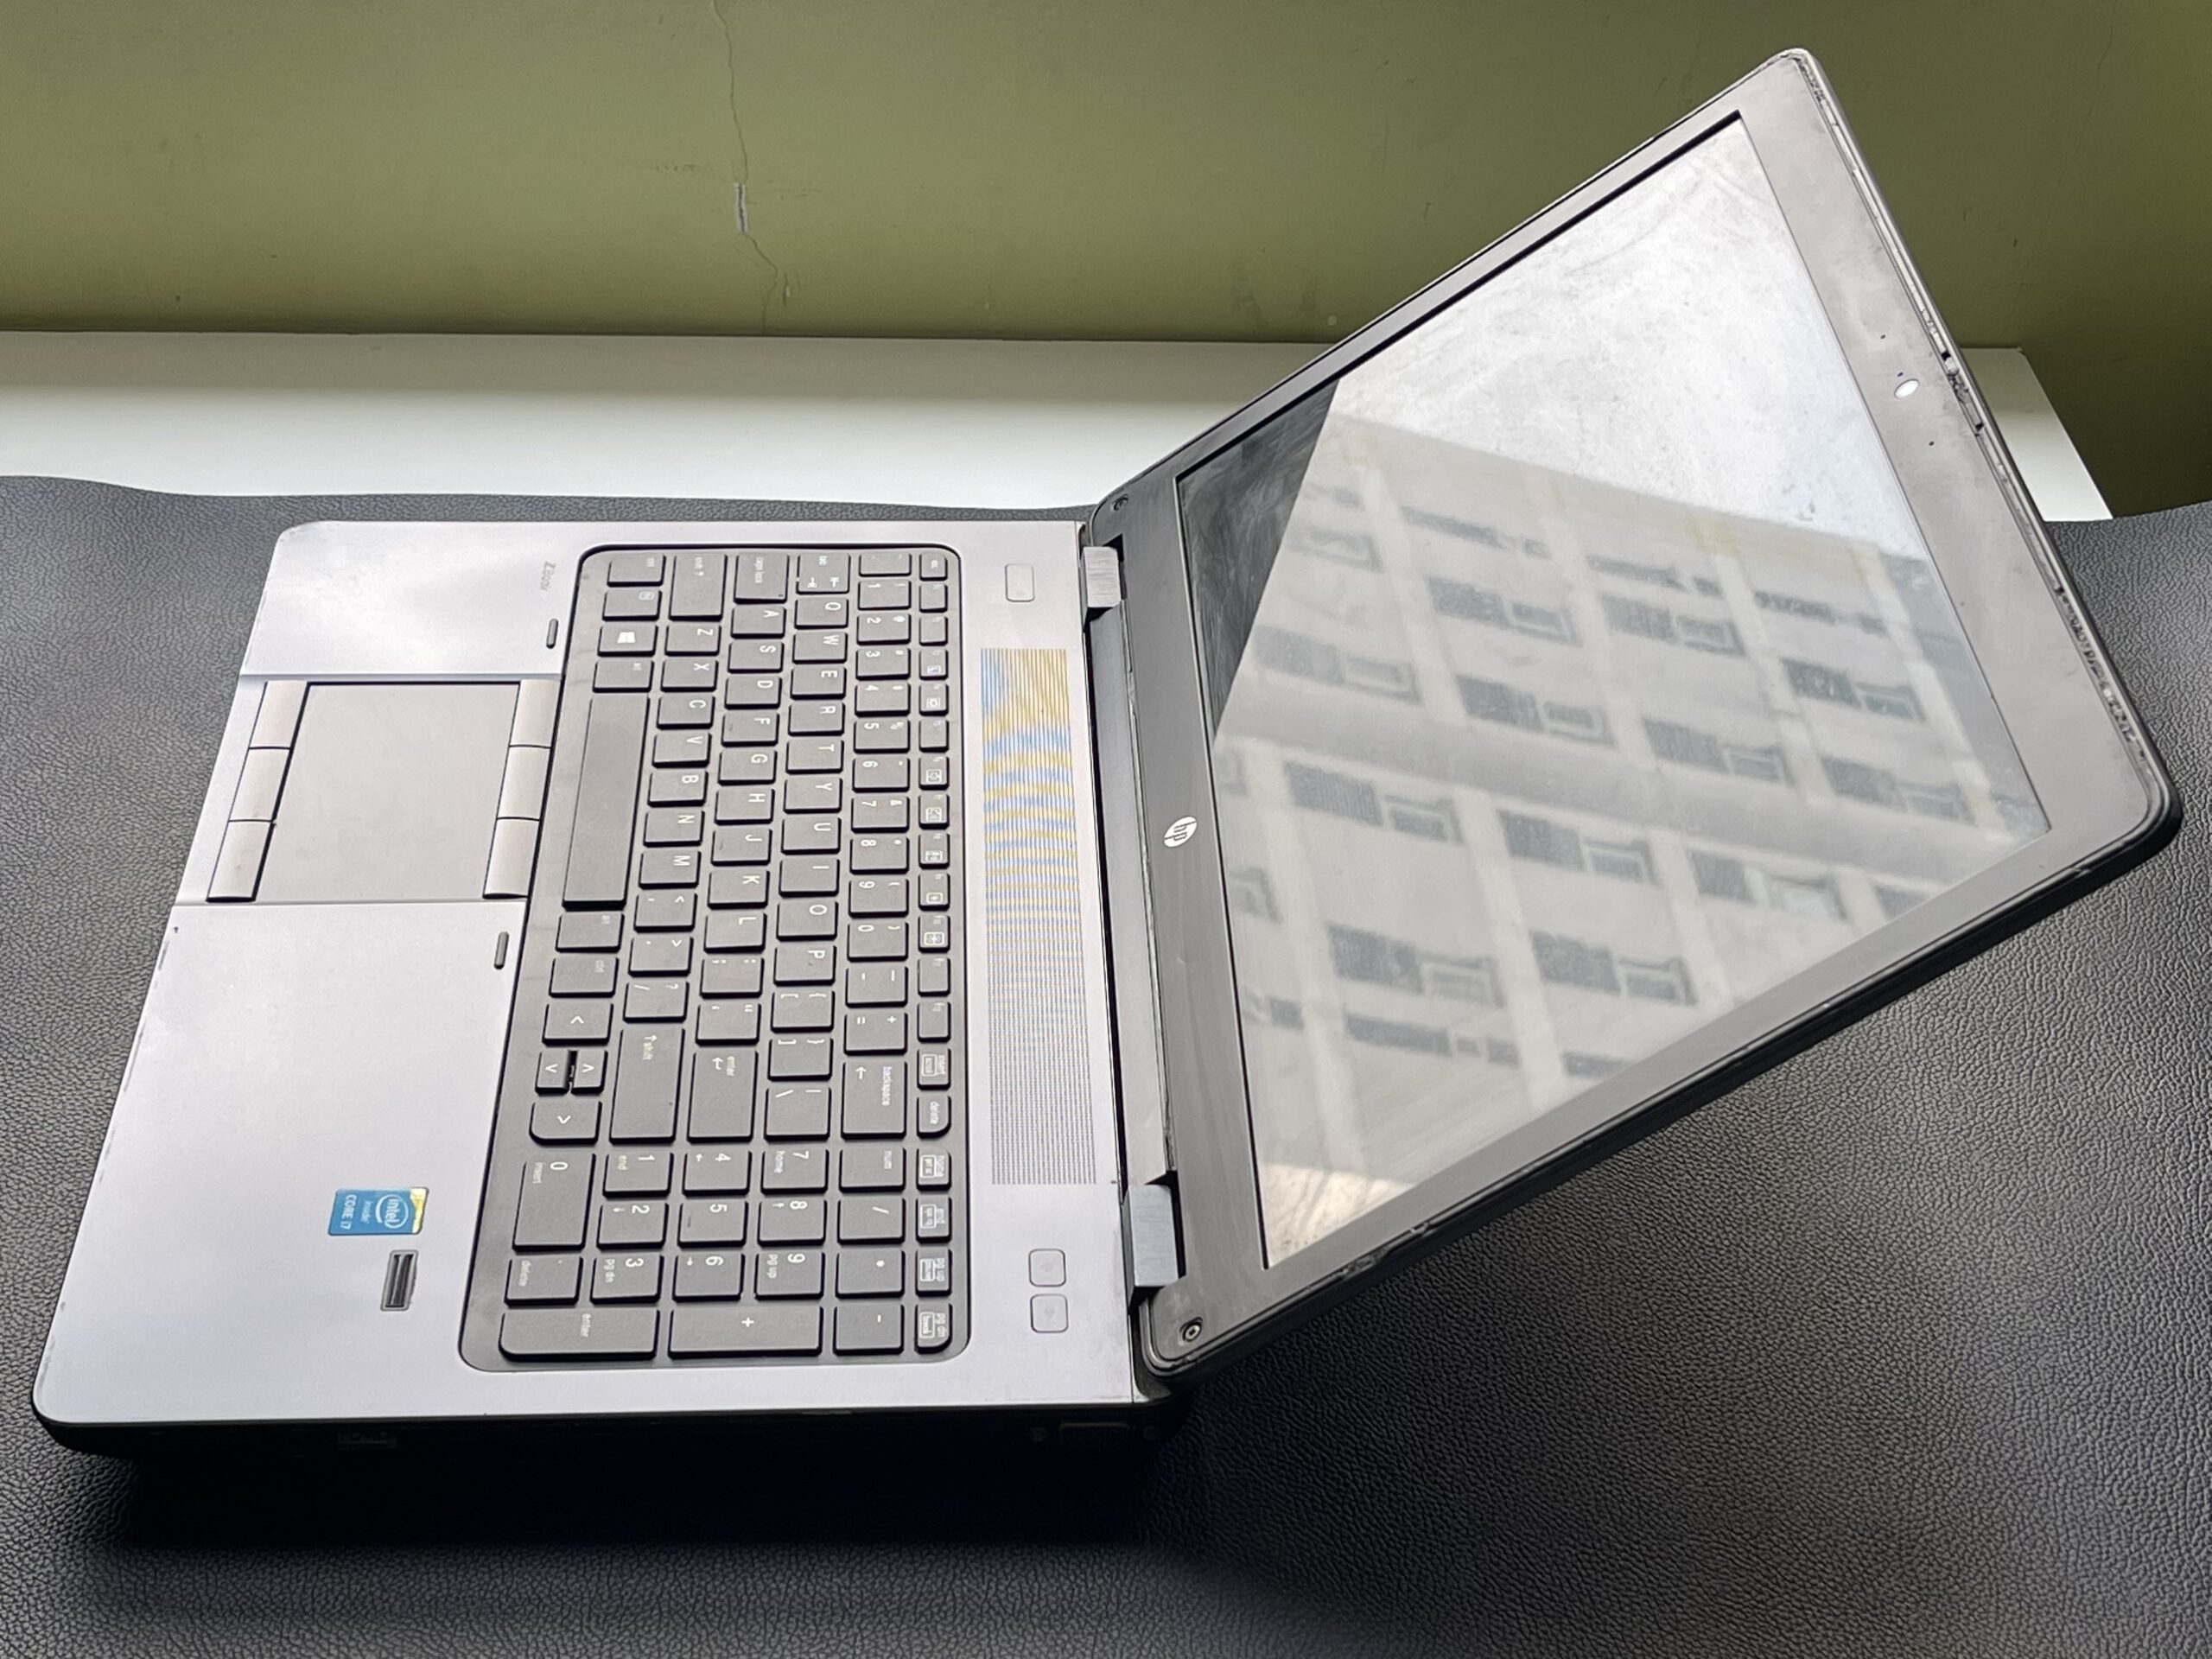 Laptop Hp Zbook 15G2 I7 8Gb 128Gb 500Gb K1100 Fhd